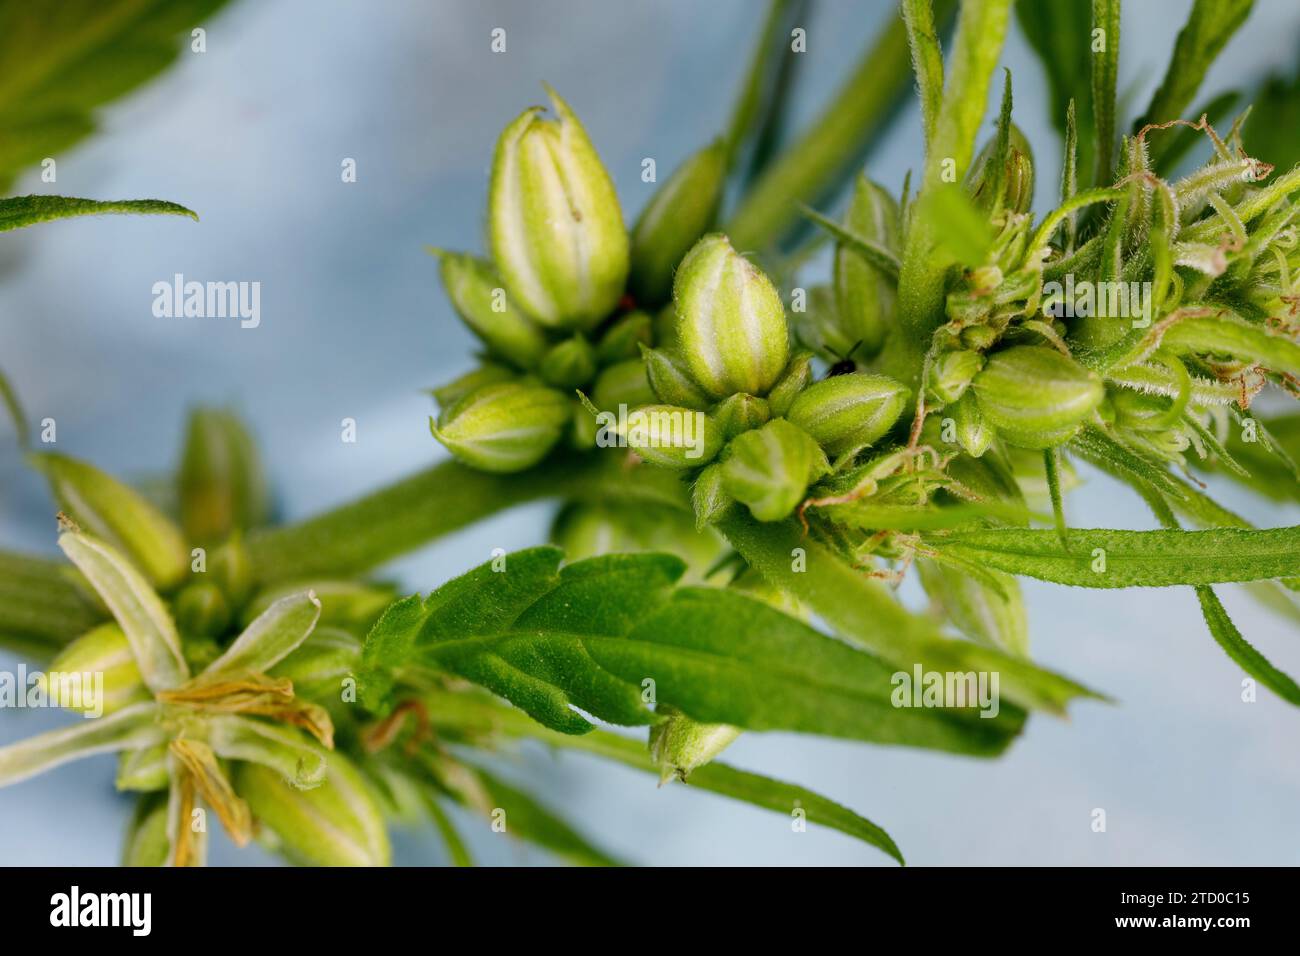 Canapa indiana, marijuana, mary jane (Cannabis sativa), fiori e gemme maschili, primo piano Foto Stock